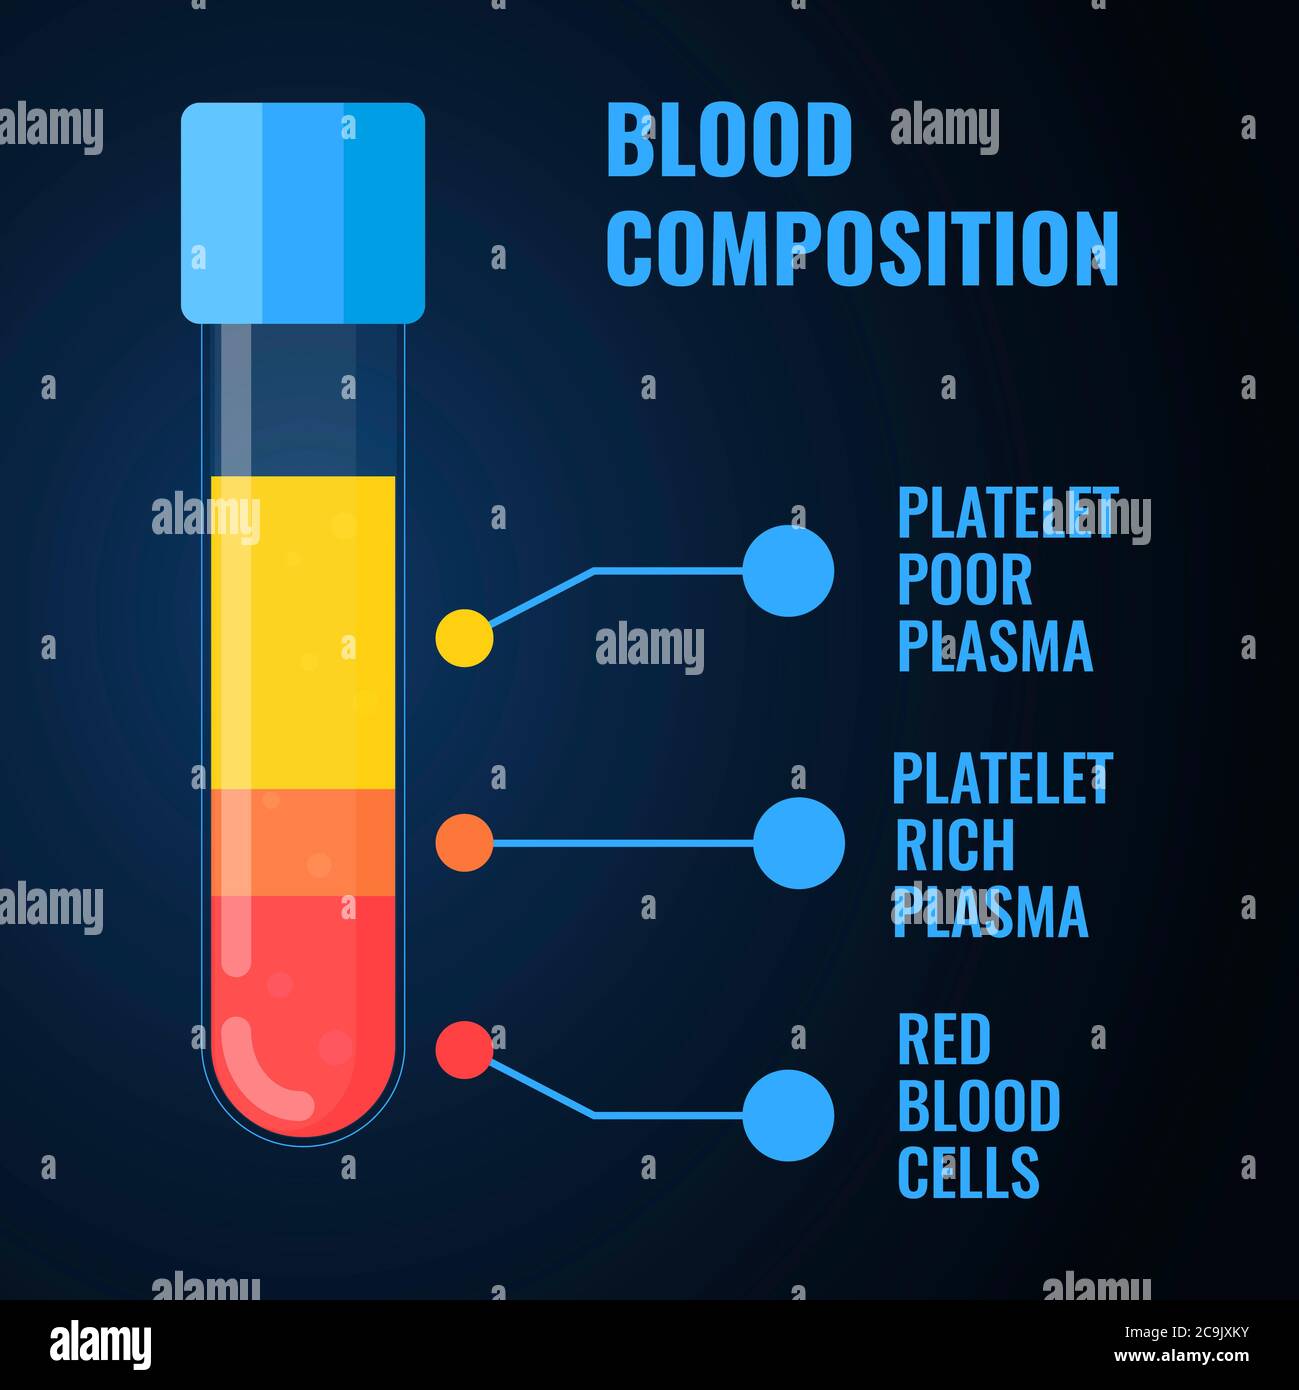 Blood composition, illustration. Stock Photo